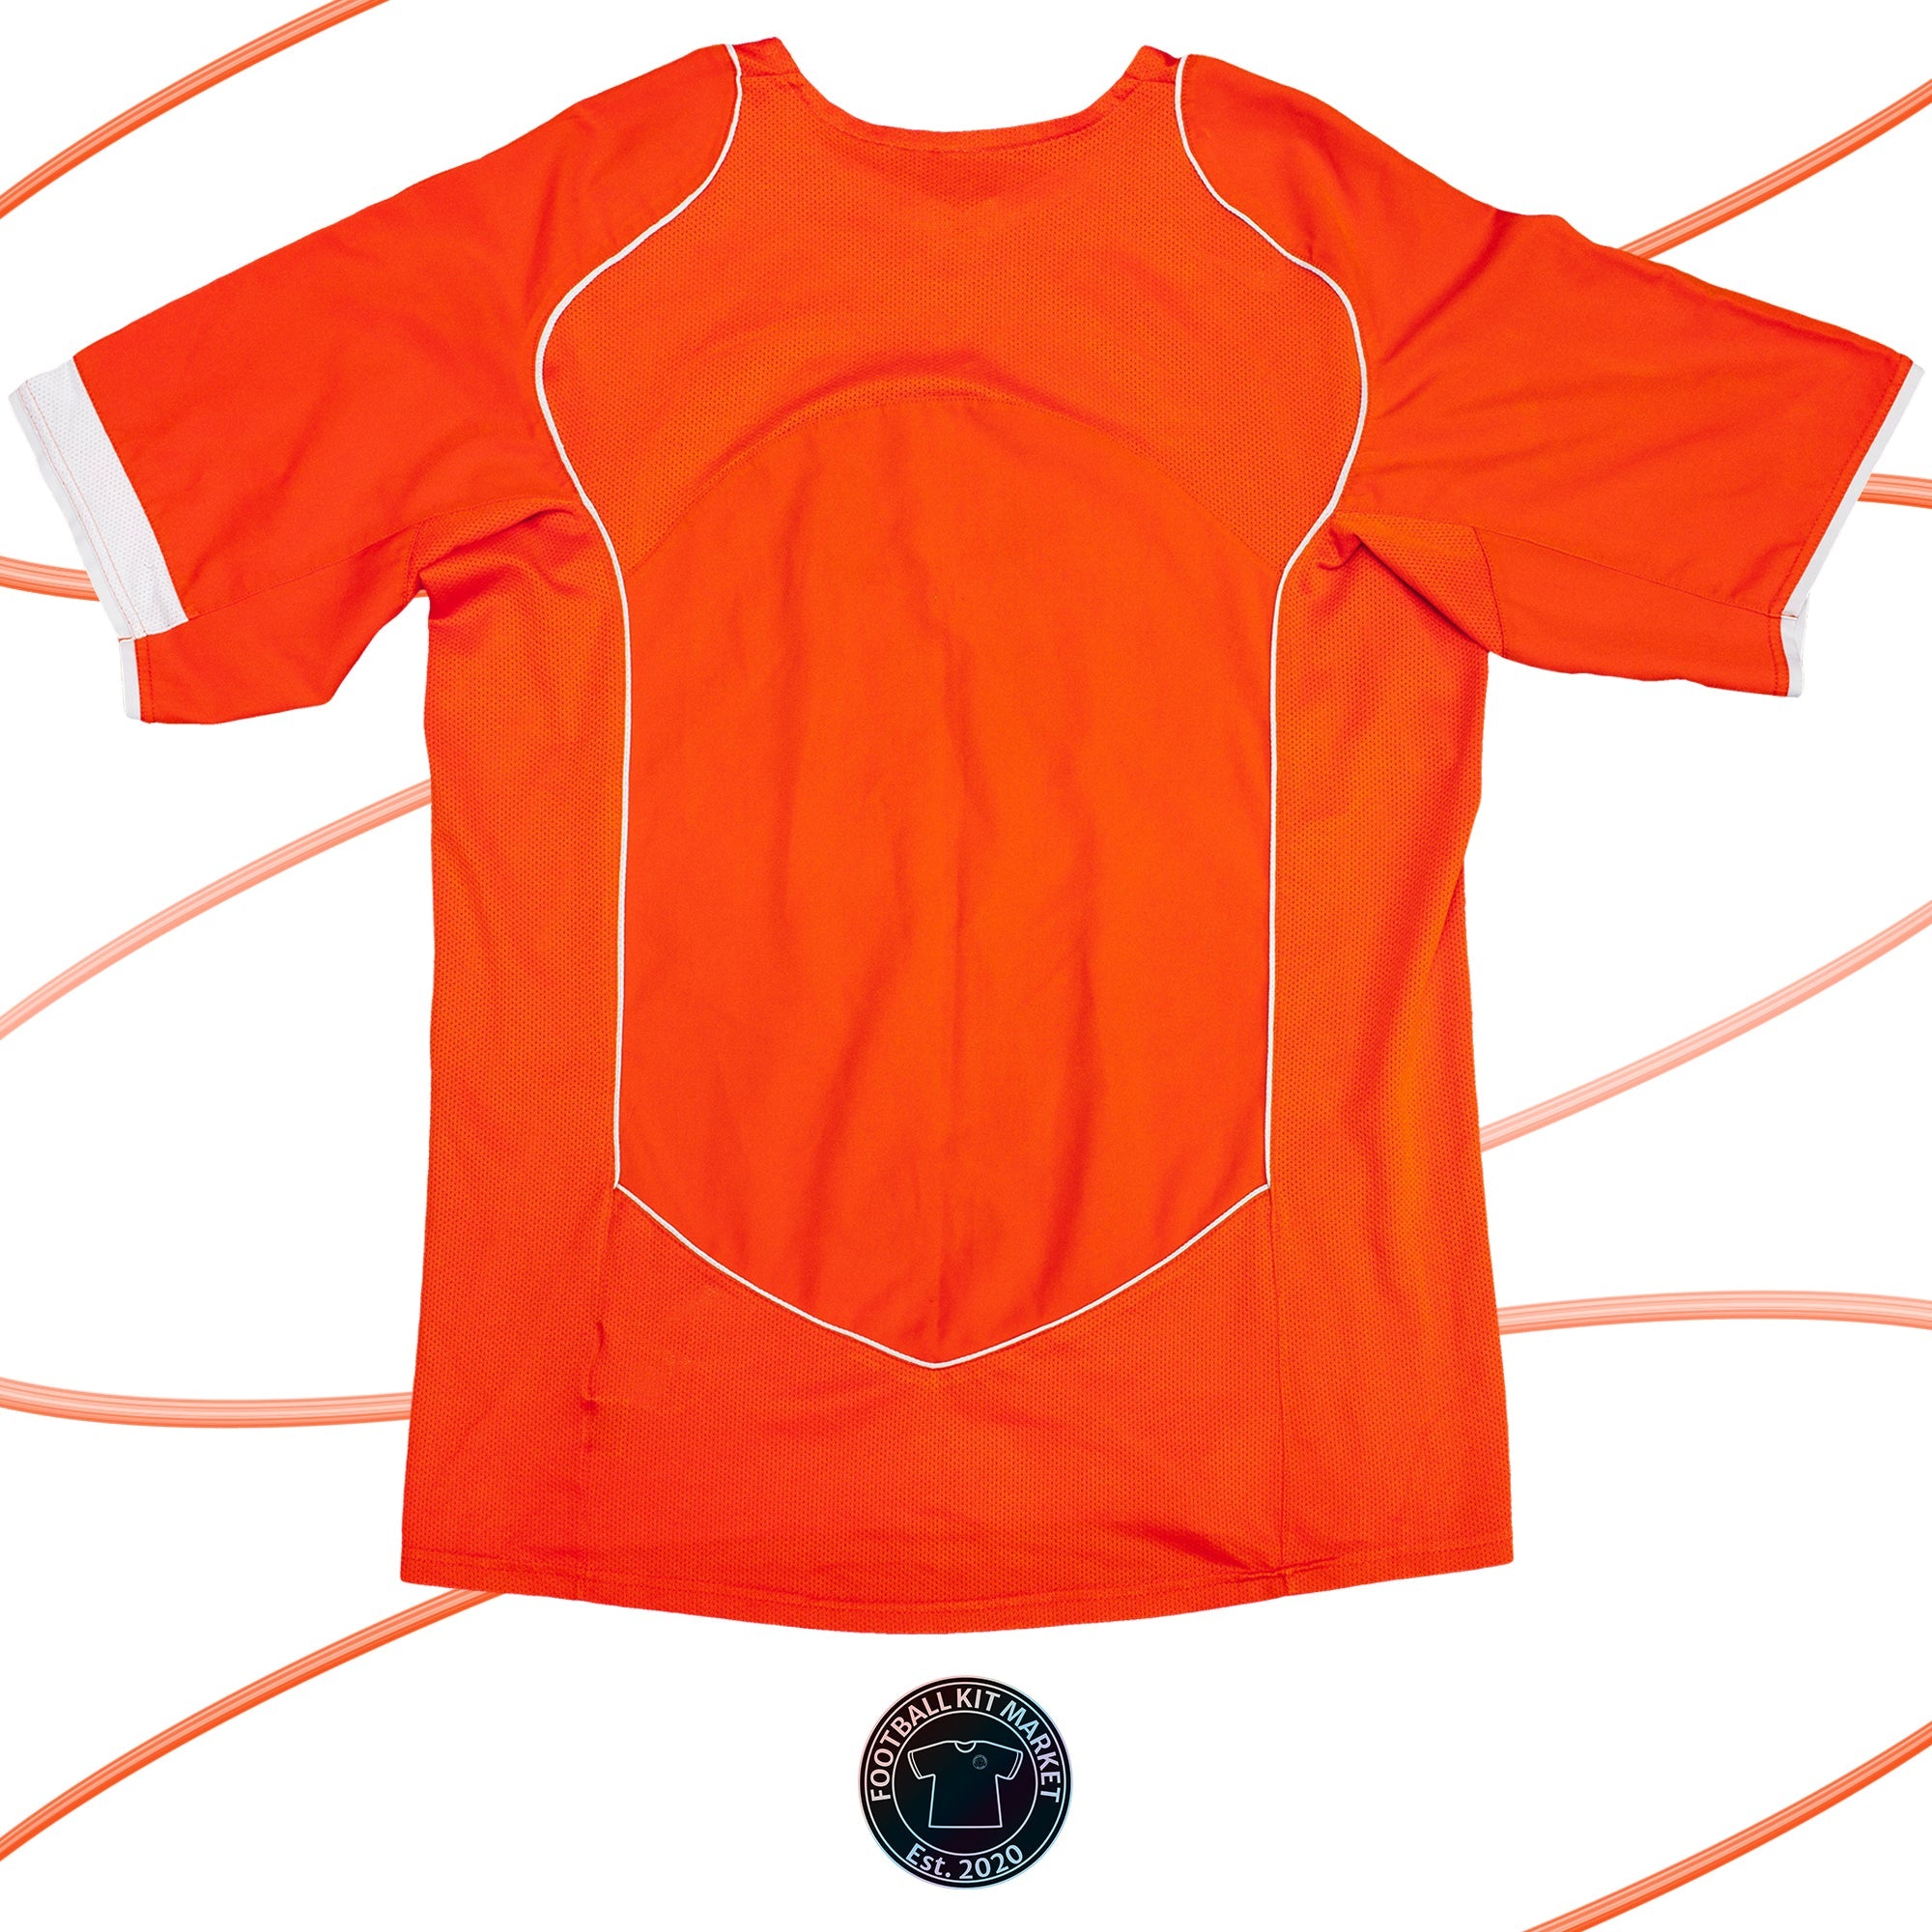 Genuine NETHERLANDS Home Shirt (2004-2005) - NIKE (M) - Product Image from Football Kit Market